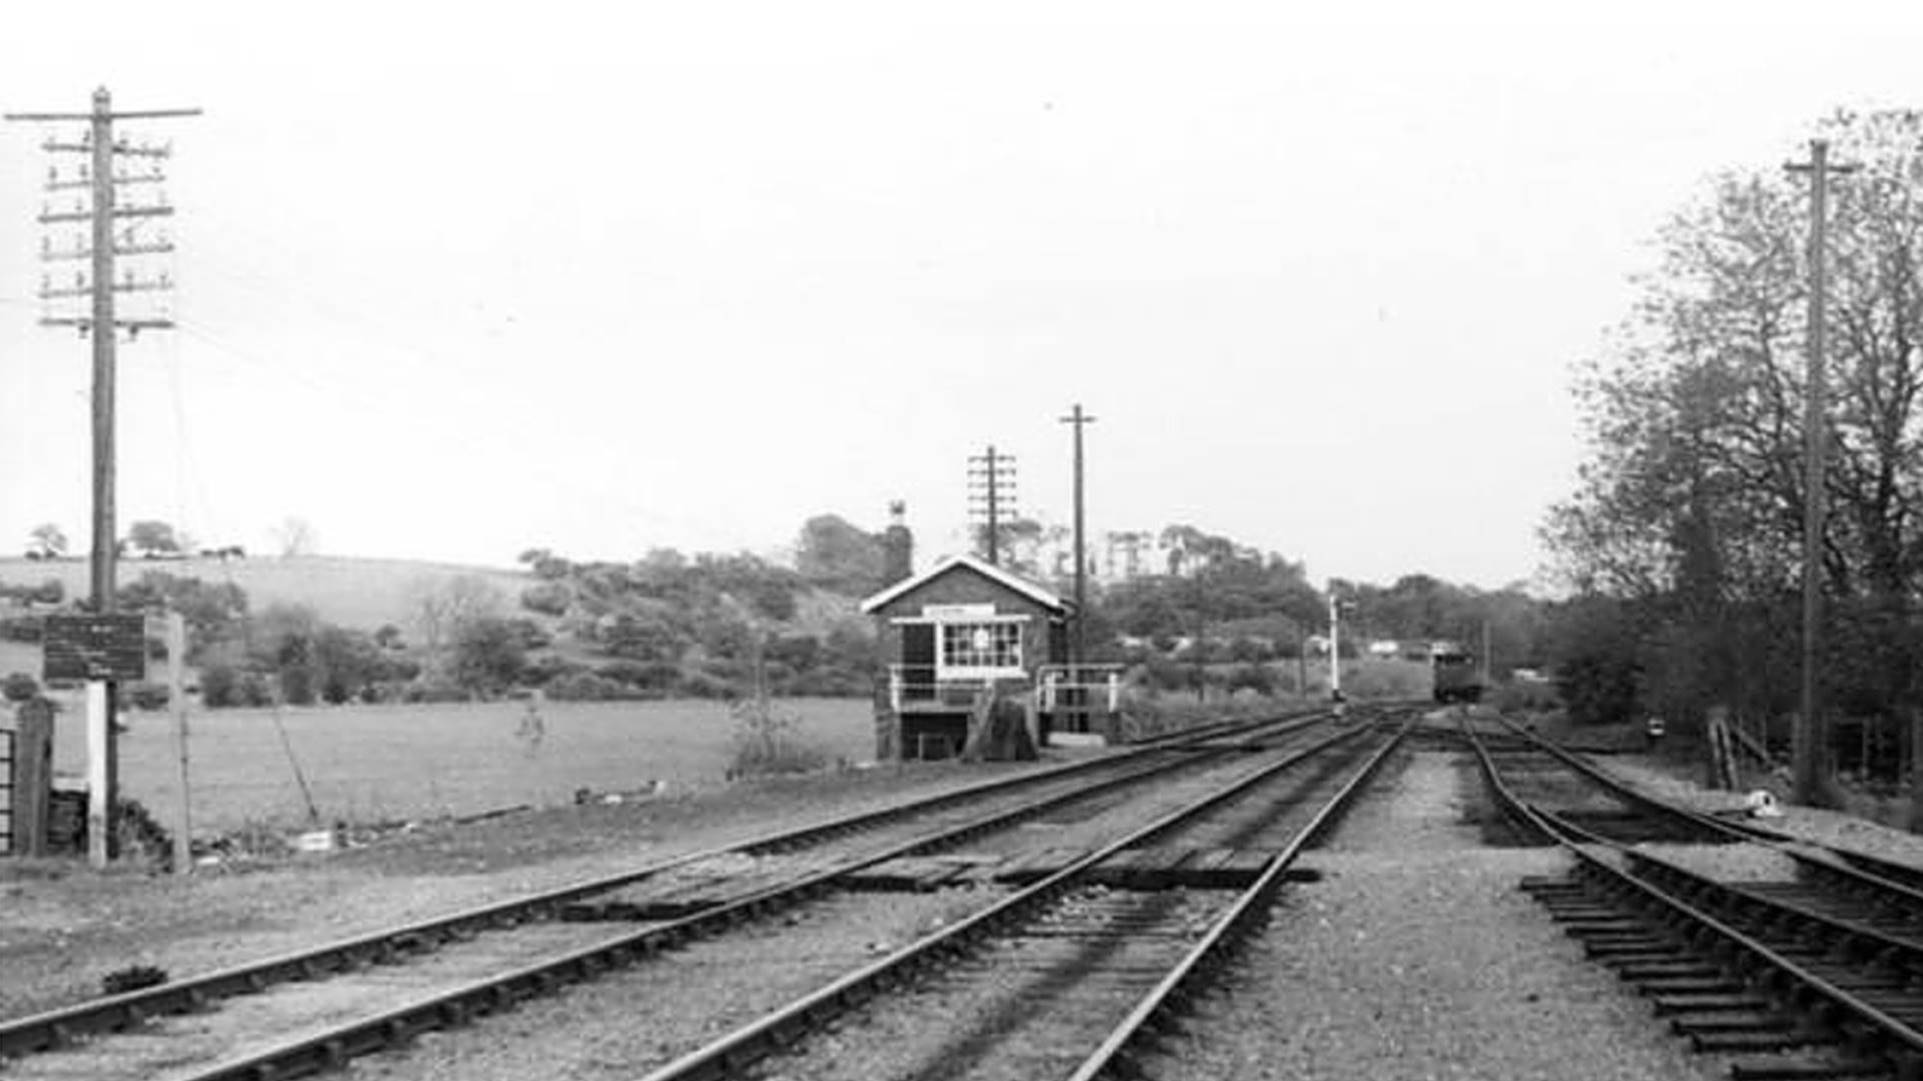 The original signal box at Leyburn Railway Station